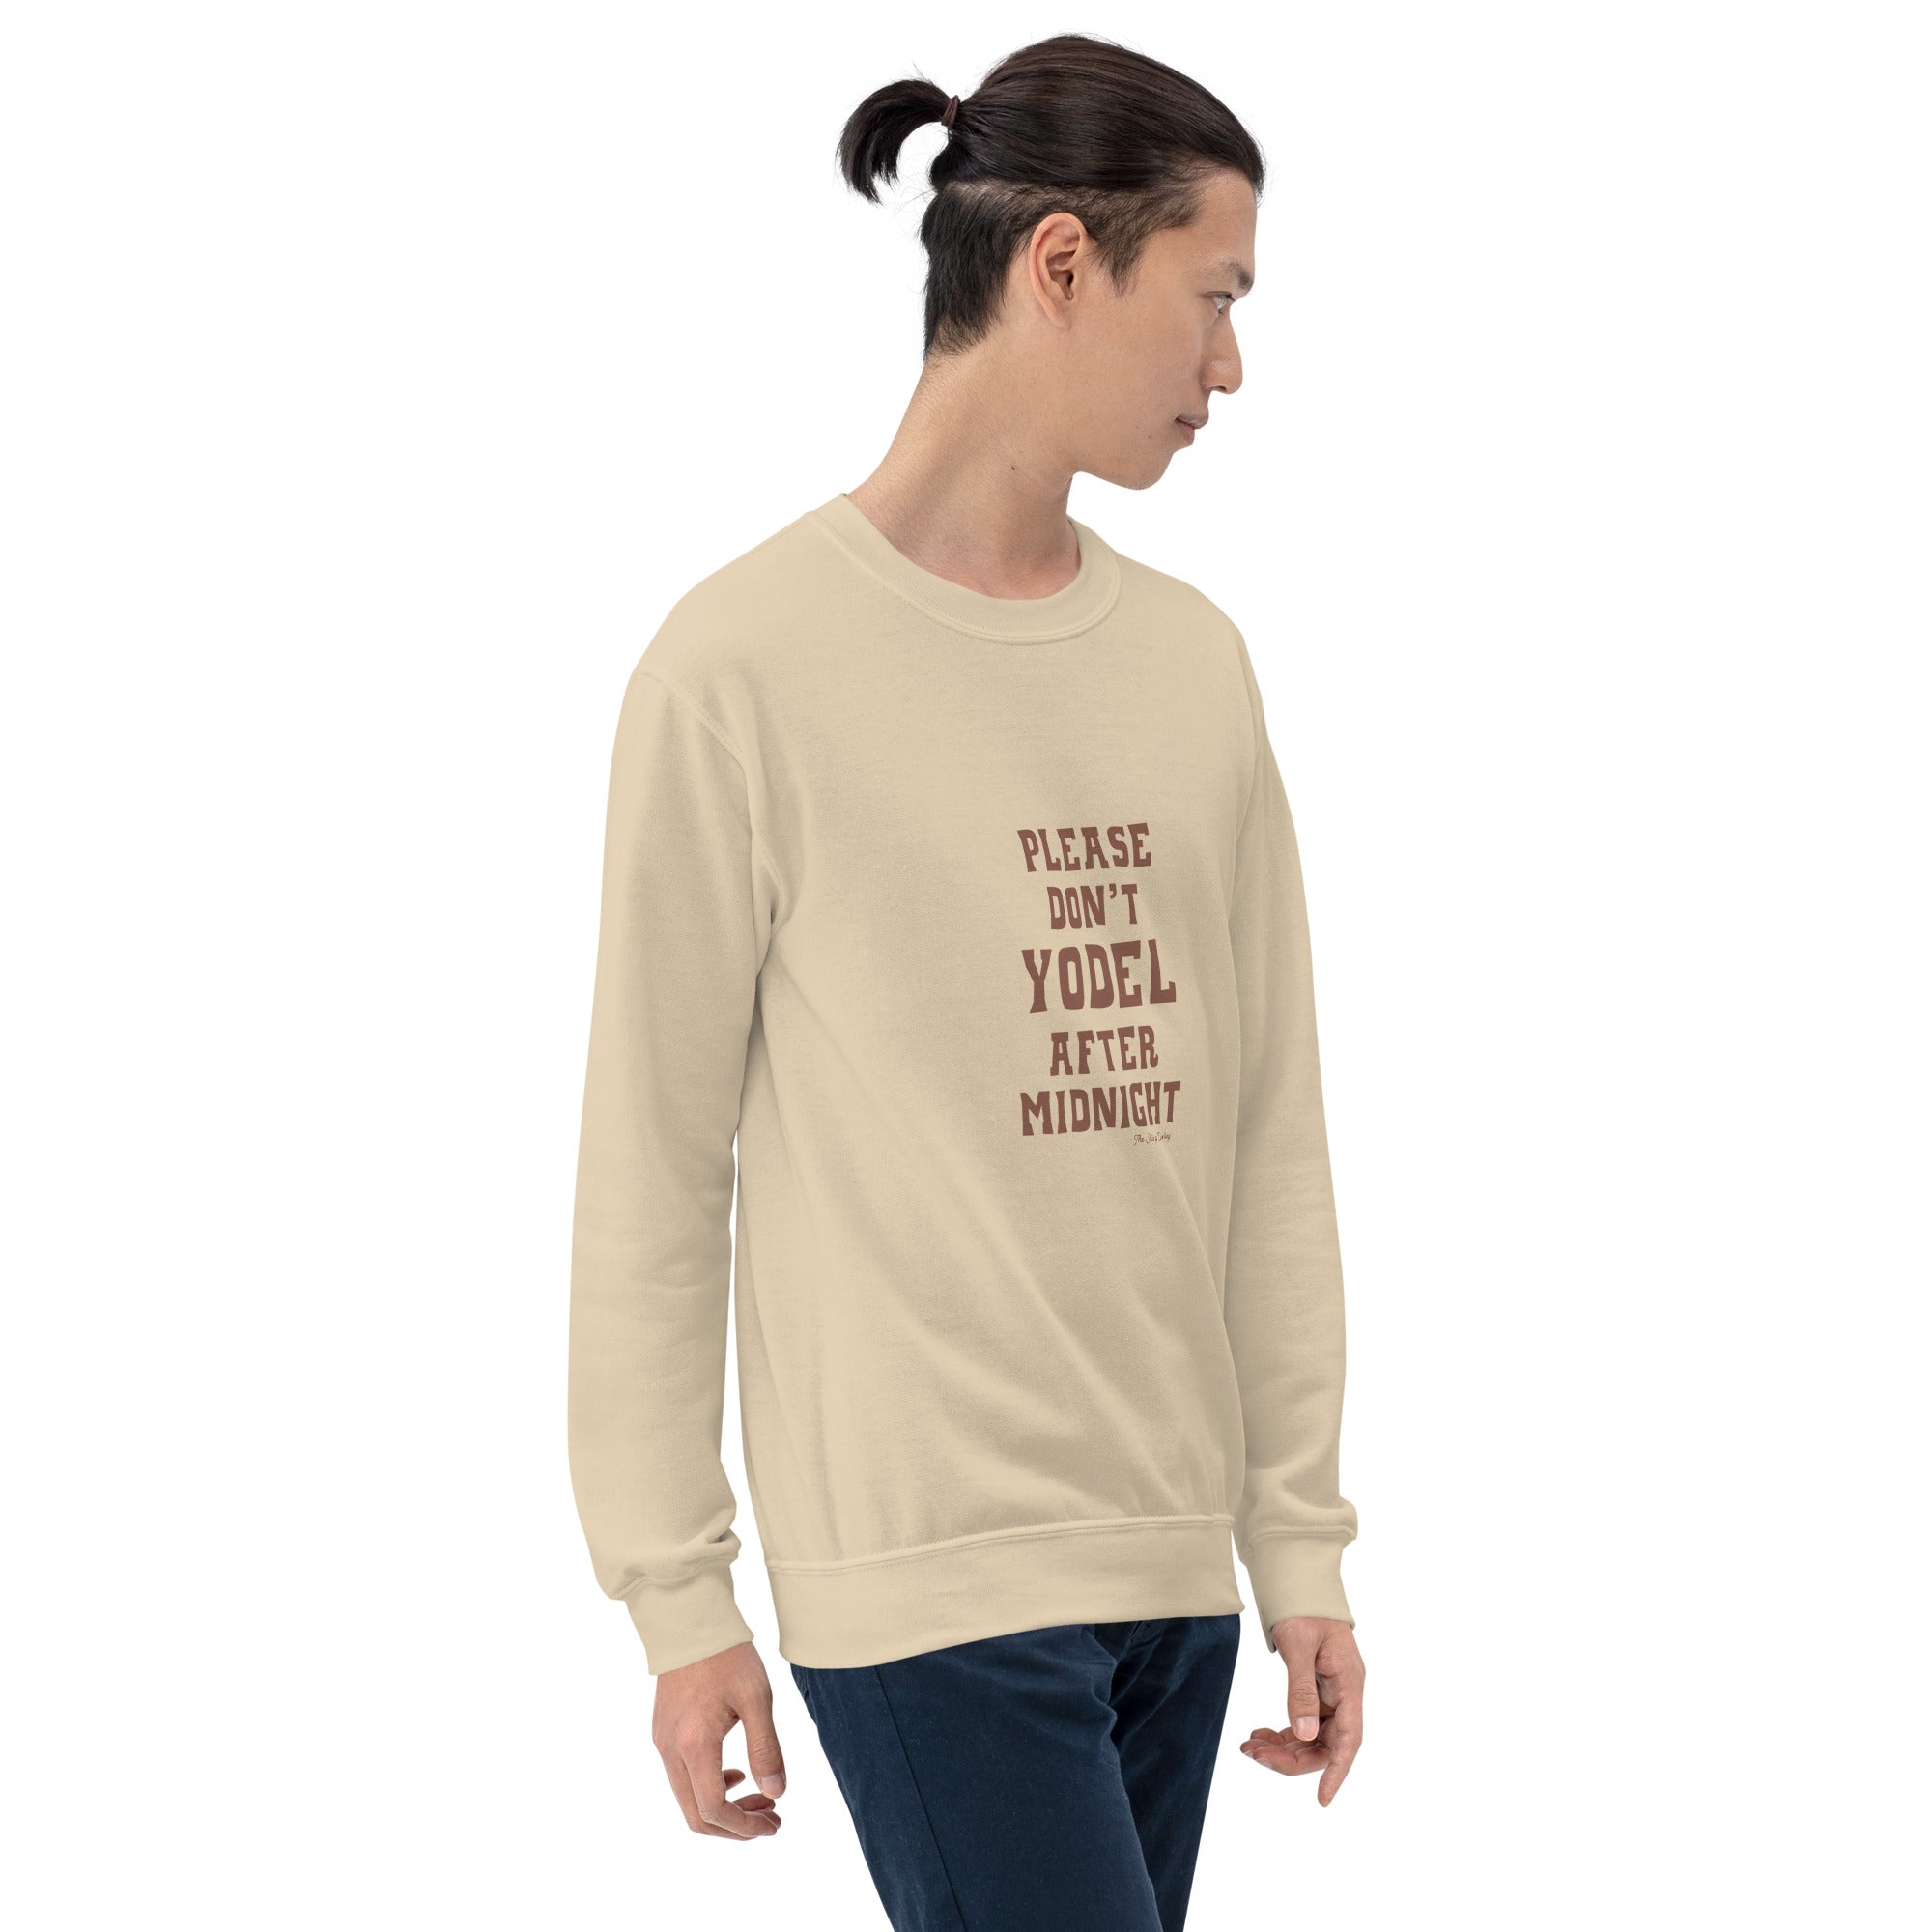 Unisex Sweatshirt Don't Yodel After Midnight dark text (front & back)